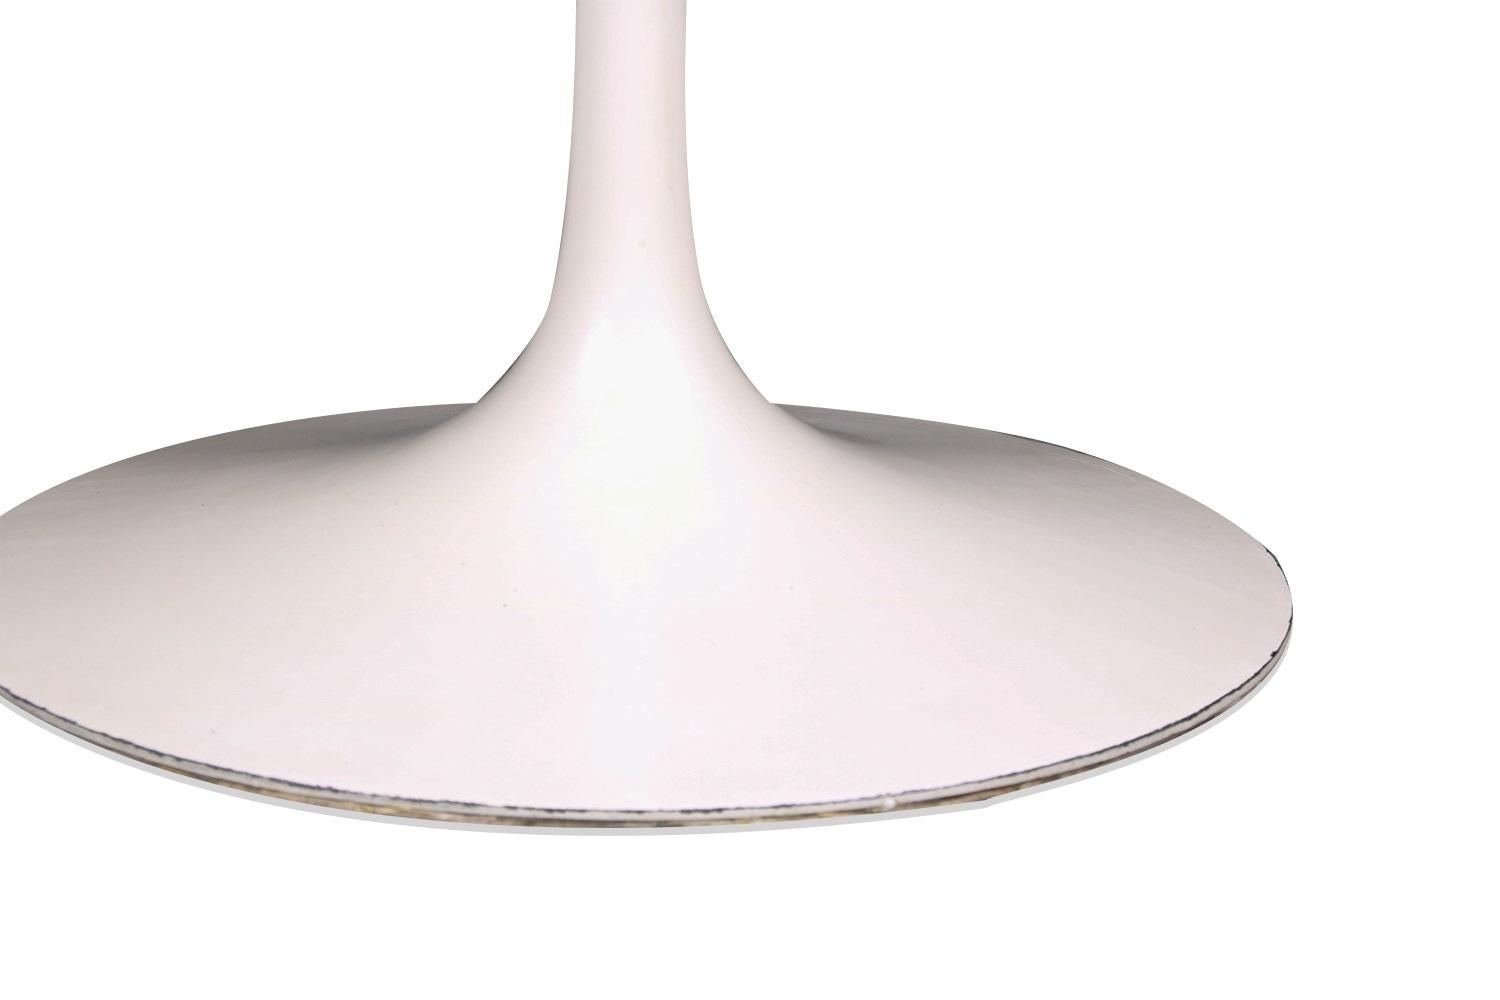 Mid-Century Modern Table Tulipe Saarinen ronde originale de Knoll du milieu du siècle dernier en vente